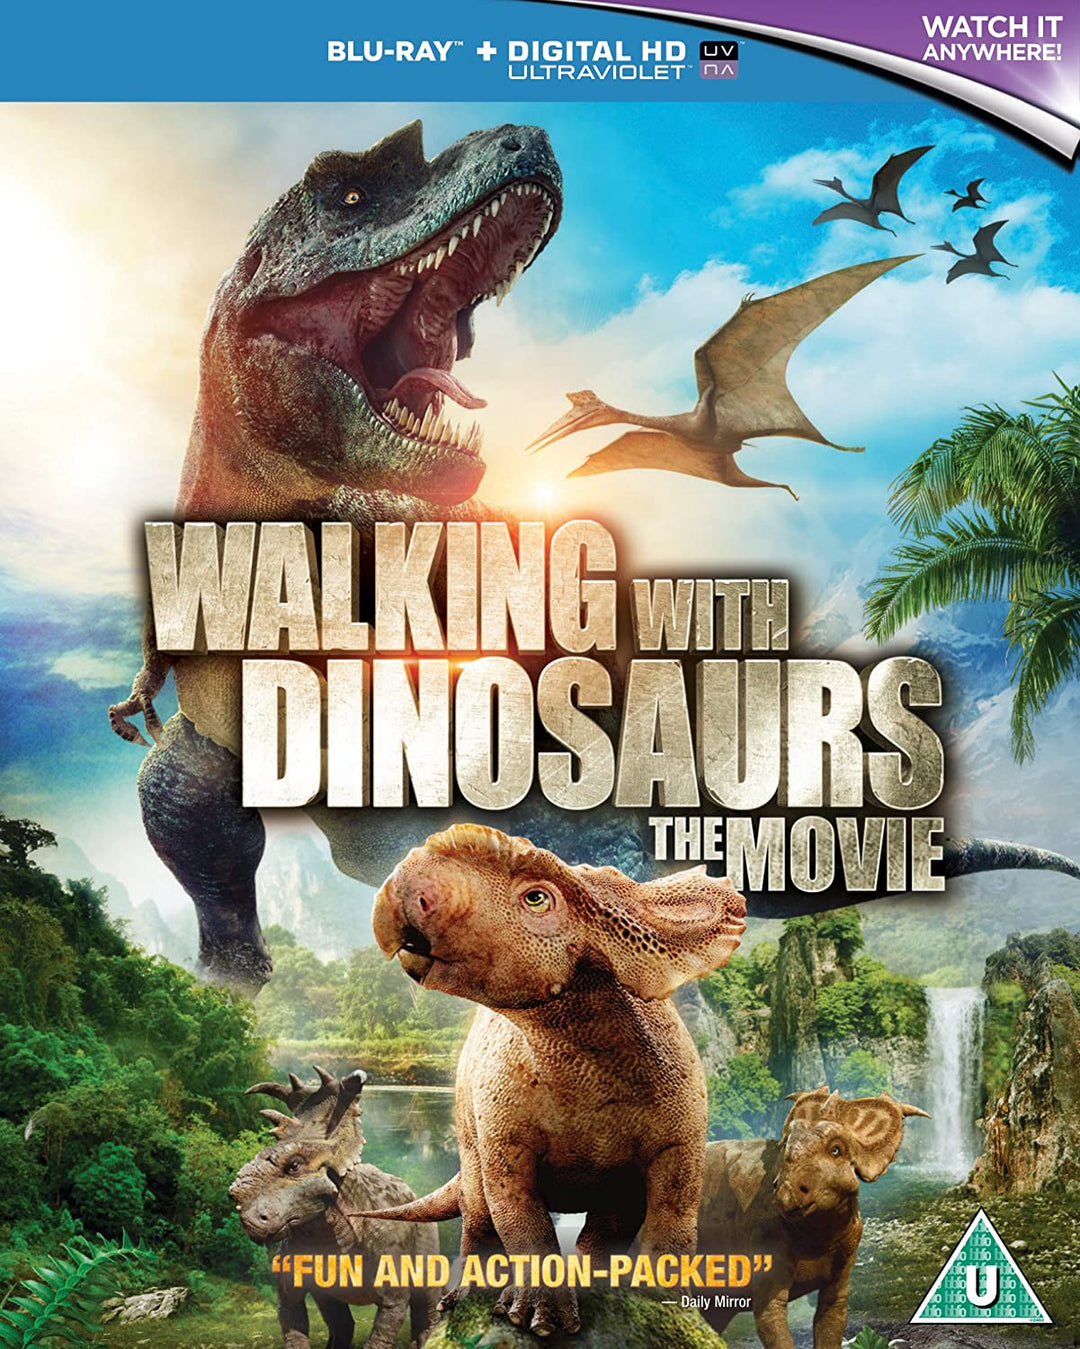 A spasso con i dinosauri [Blu-ray] [2017]